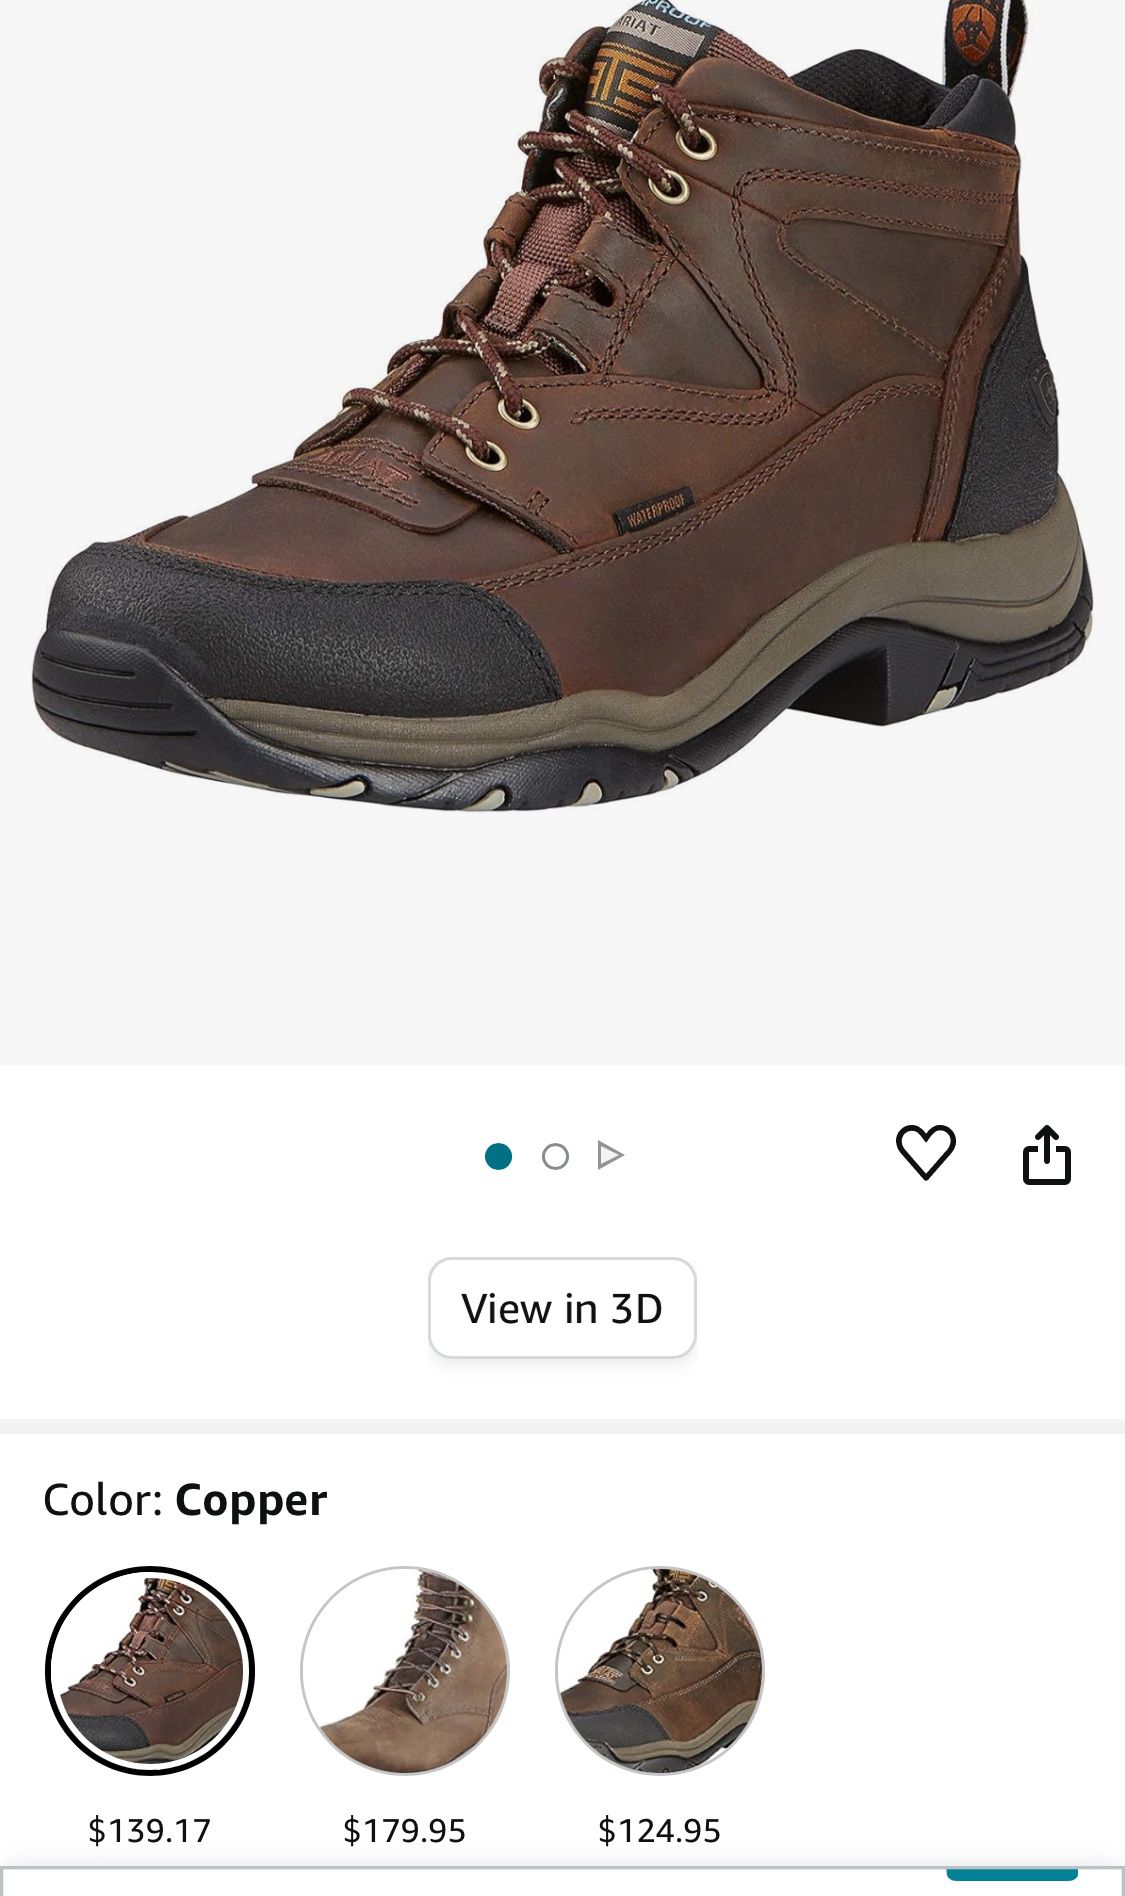 Ariat Terrain Waterproof Hiking Boot – Men’s Leather Waterproof Outdoor Hiking Boots Size 11